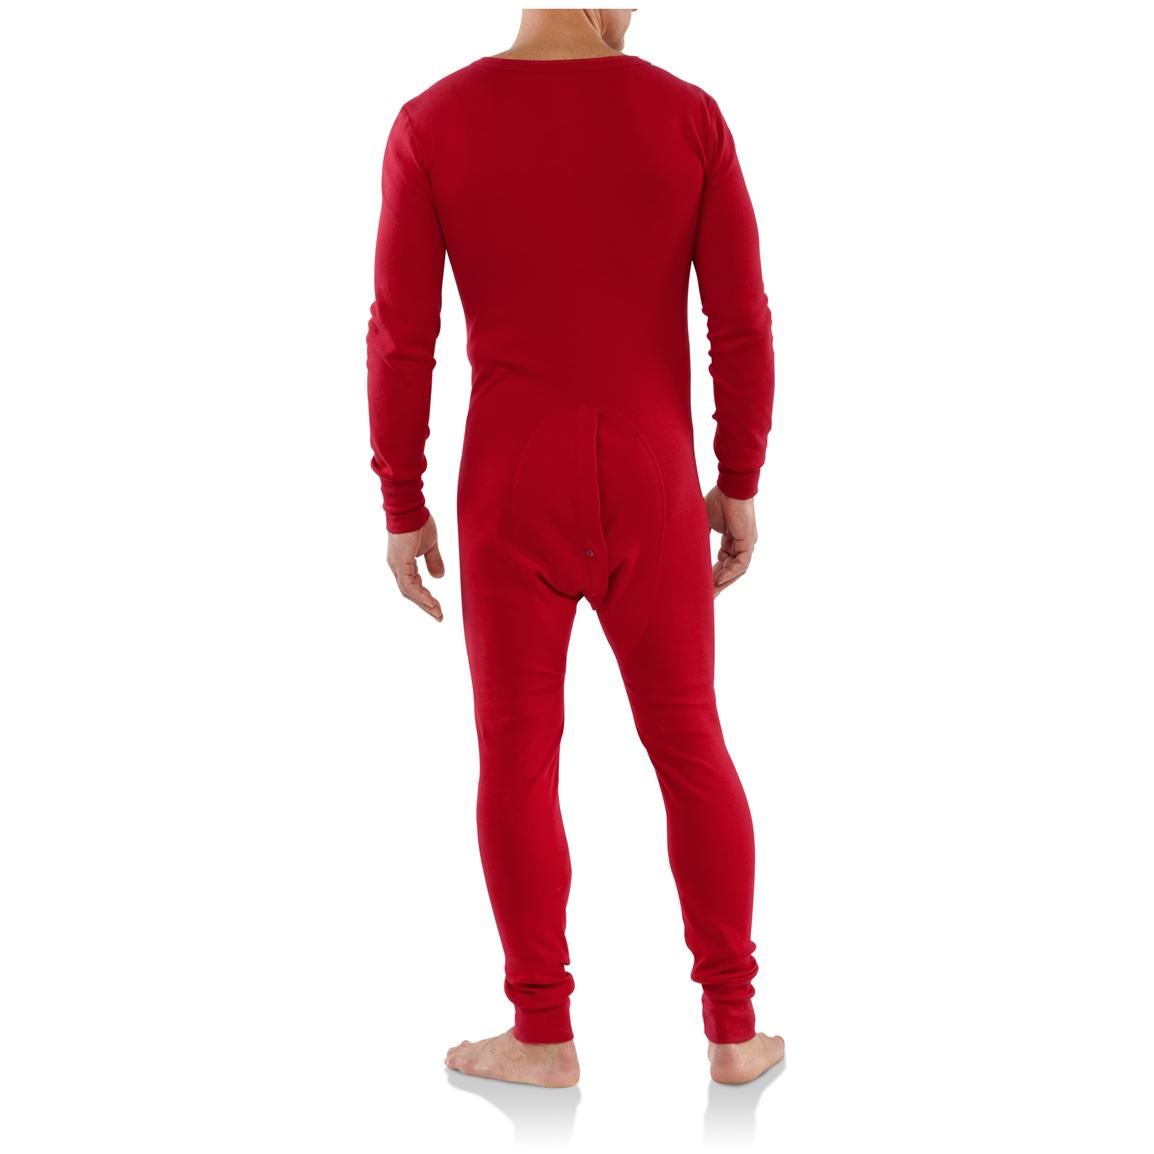 carhartt-midweight-cotton-union-suit-red-427602-underwear-base